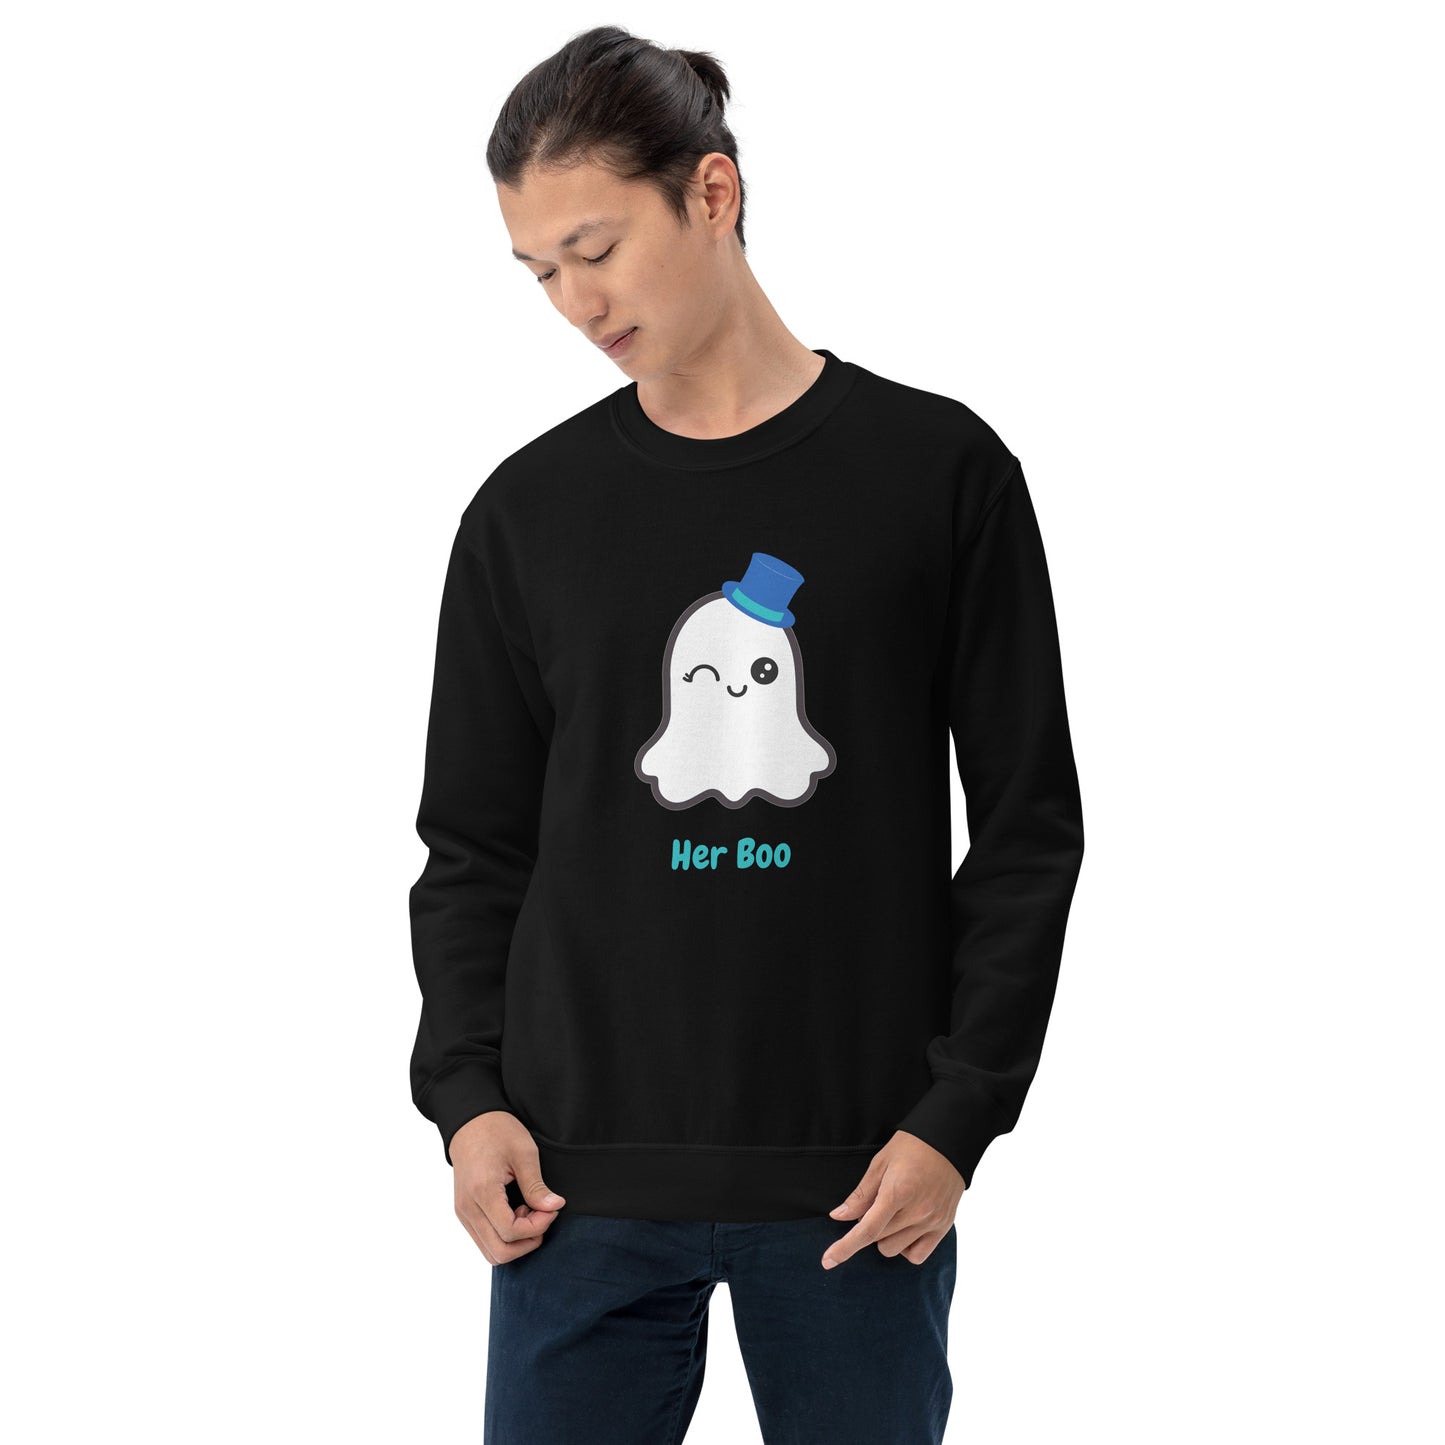 His Boo/ Her Boo Sweatshirt